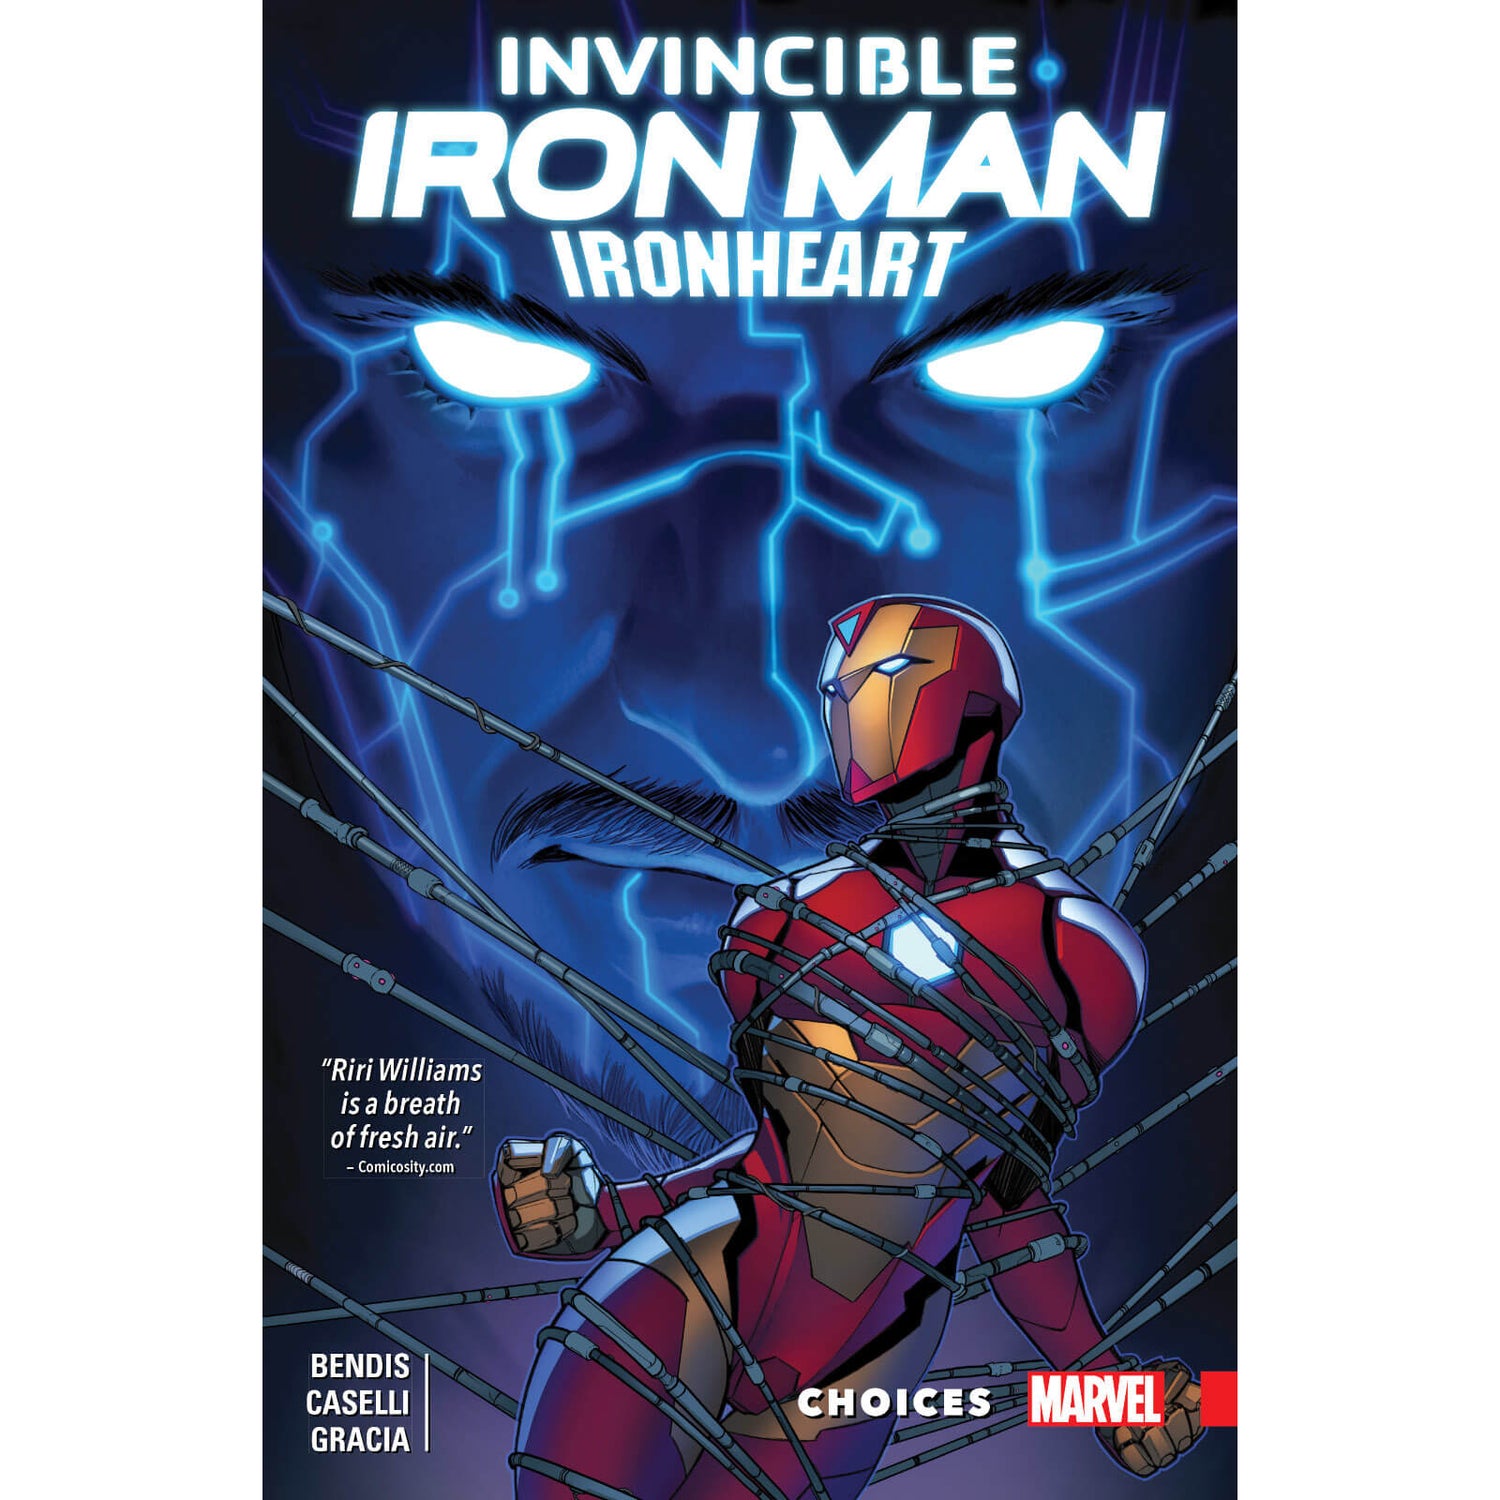 Marvel Comics Invincible Iron Man Ironheart Trade Paperback Vol 02 Choices Graphic Novel